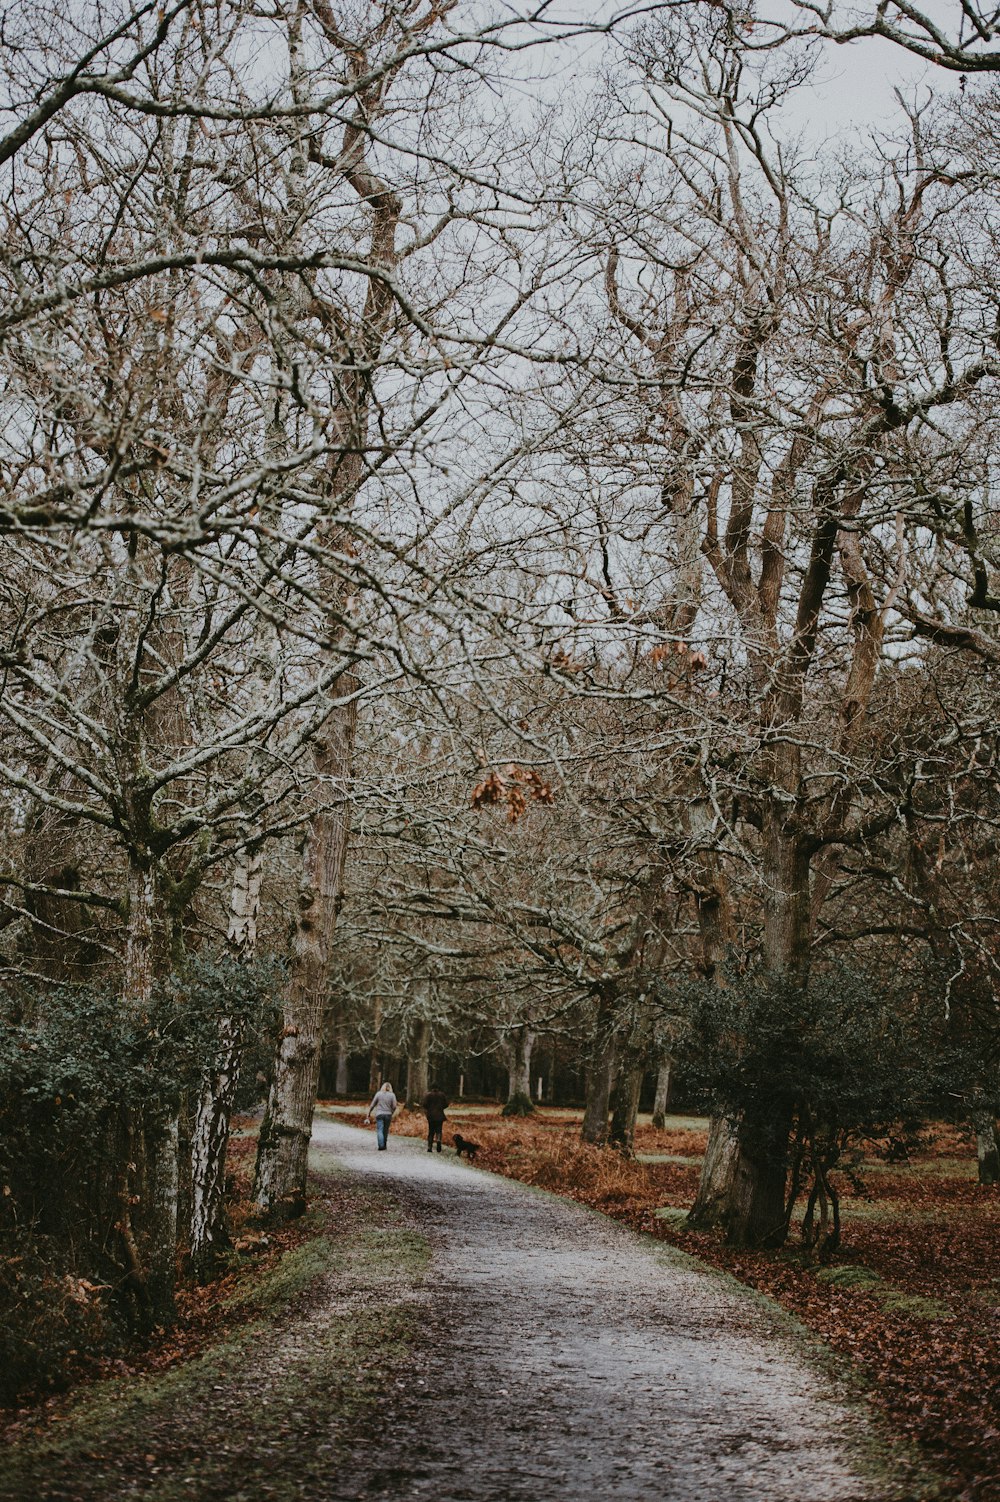 road in between bare trees